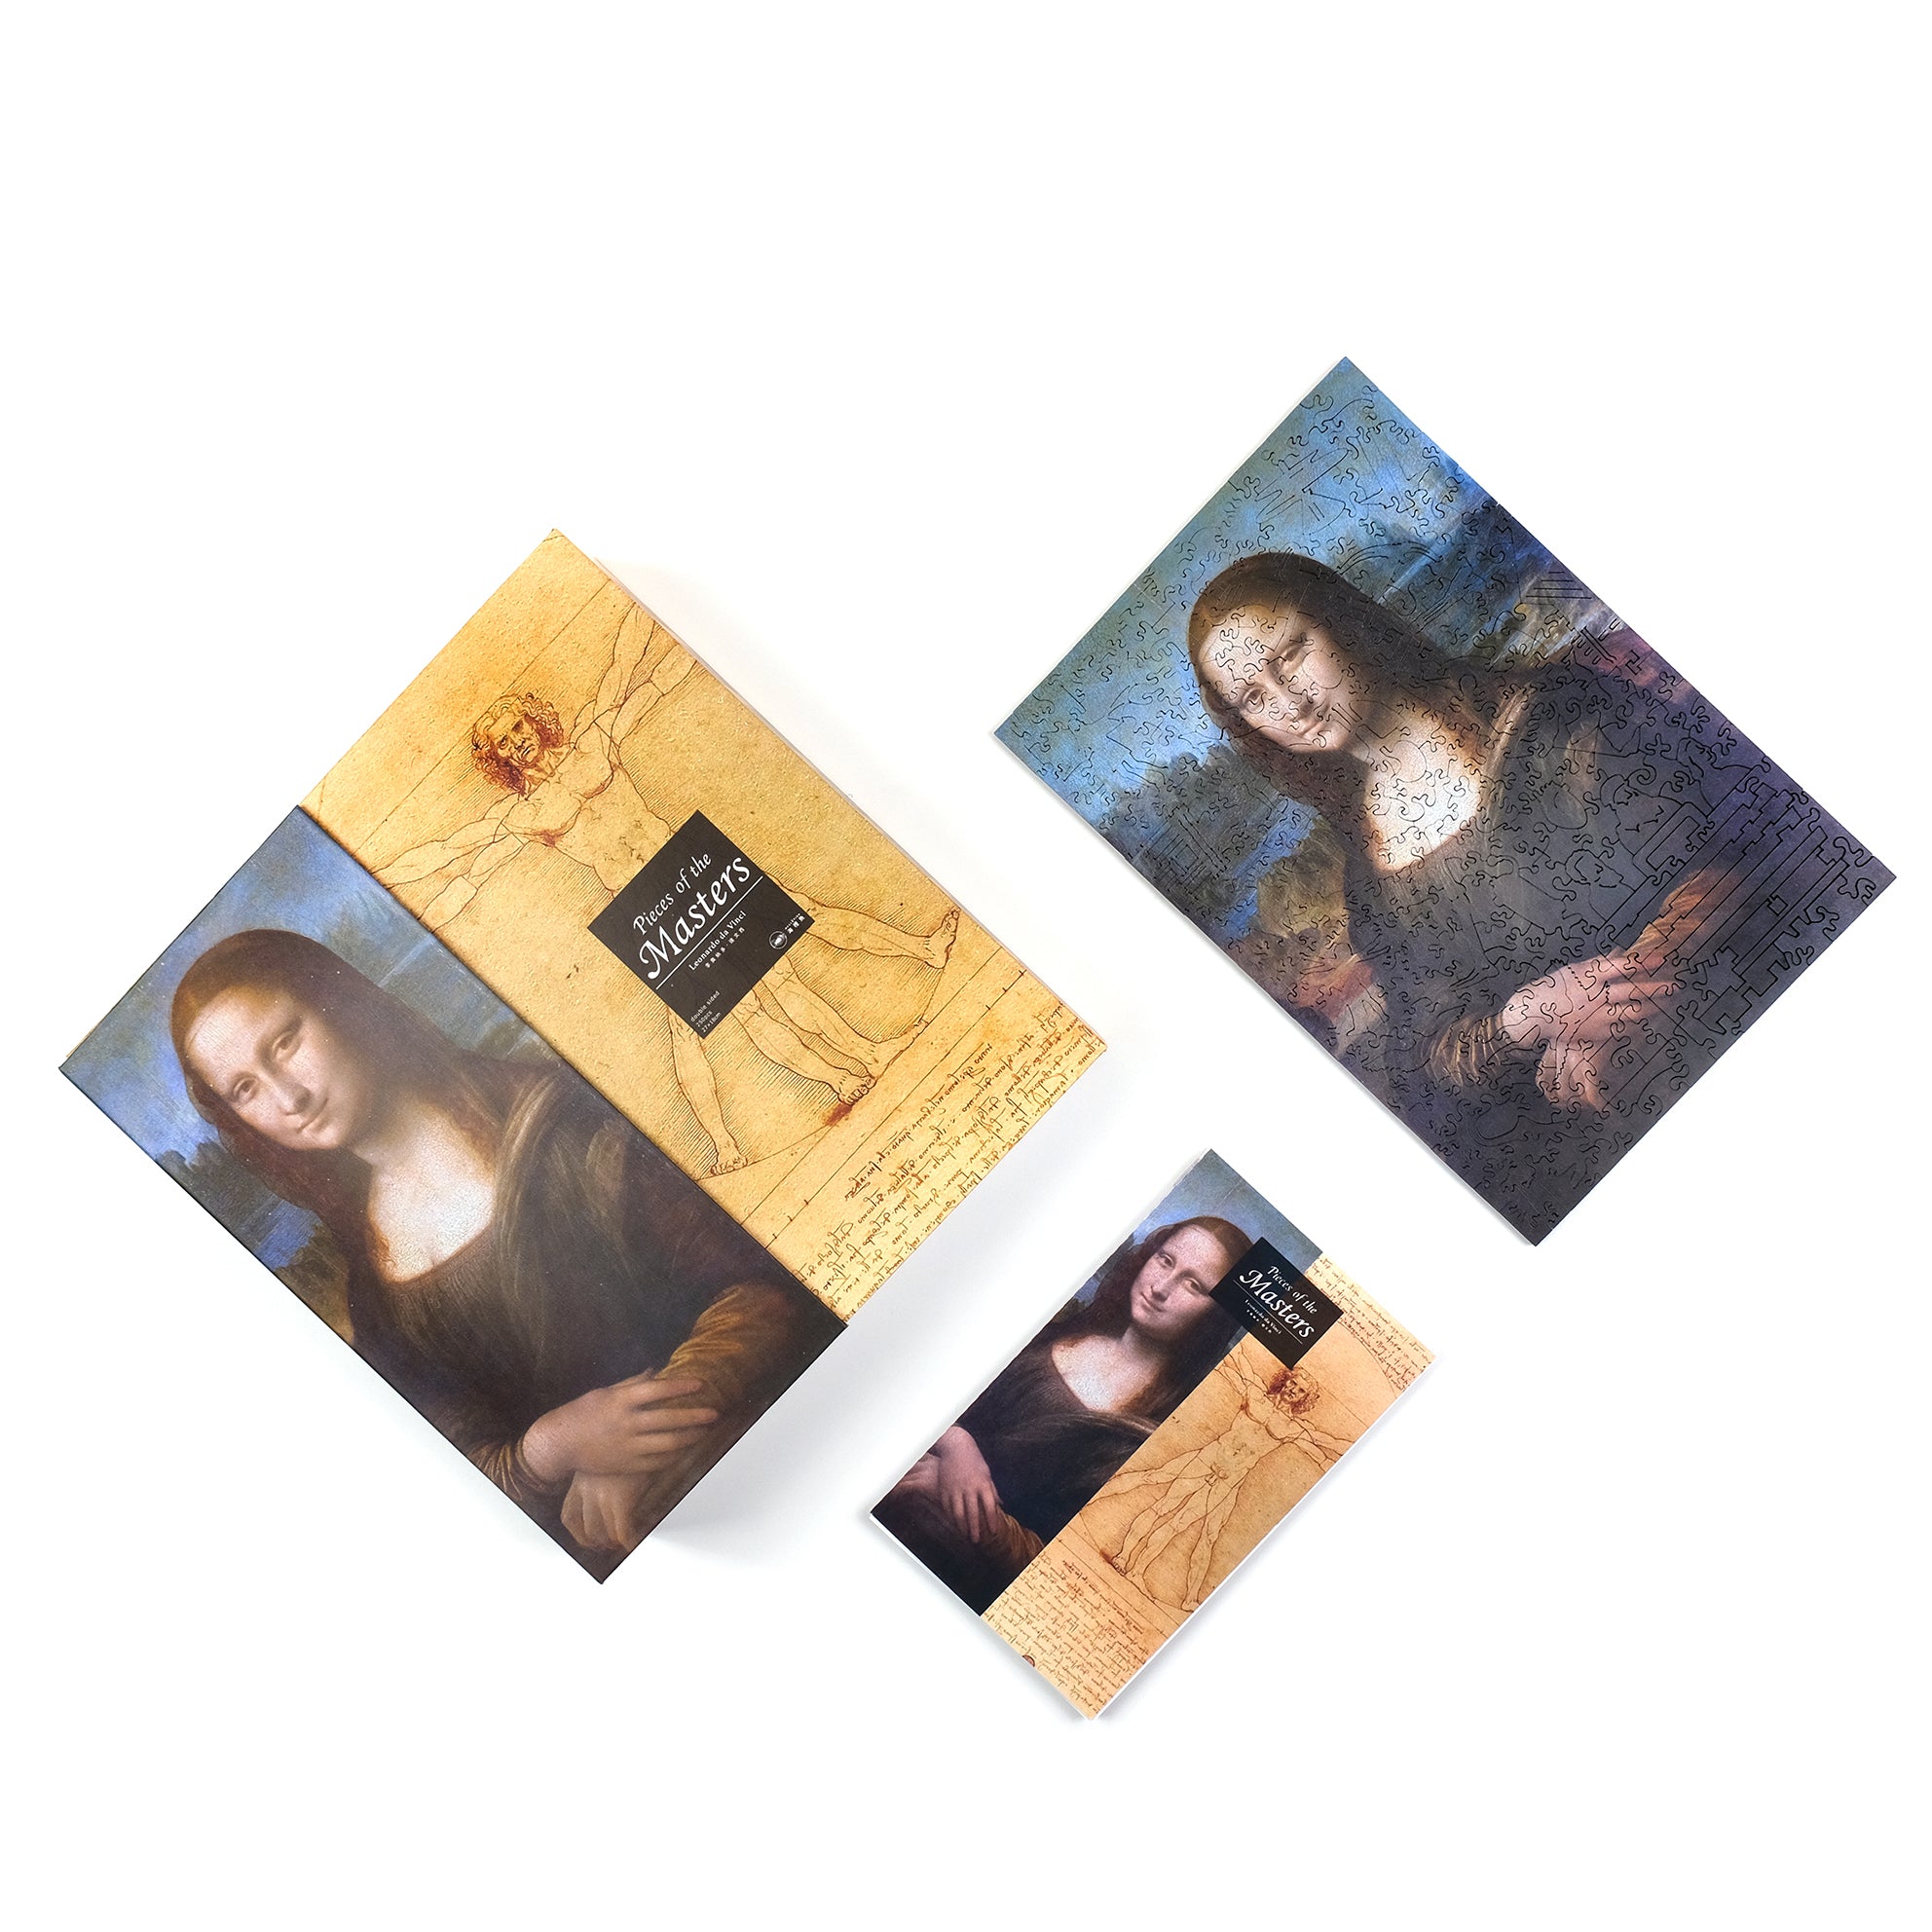 Pieces Of the Masters - Da Vinci